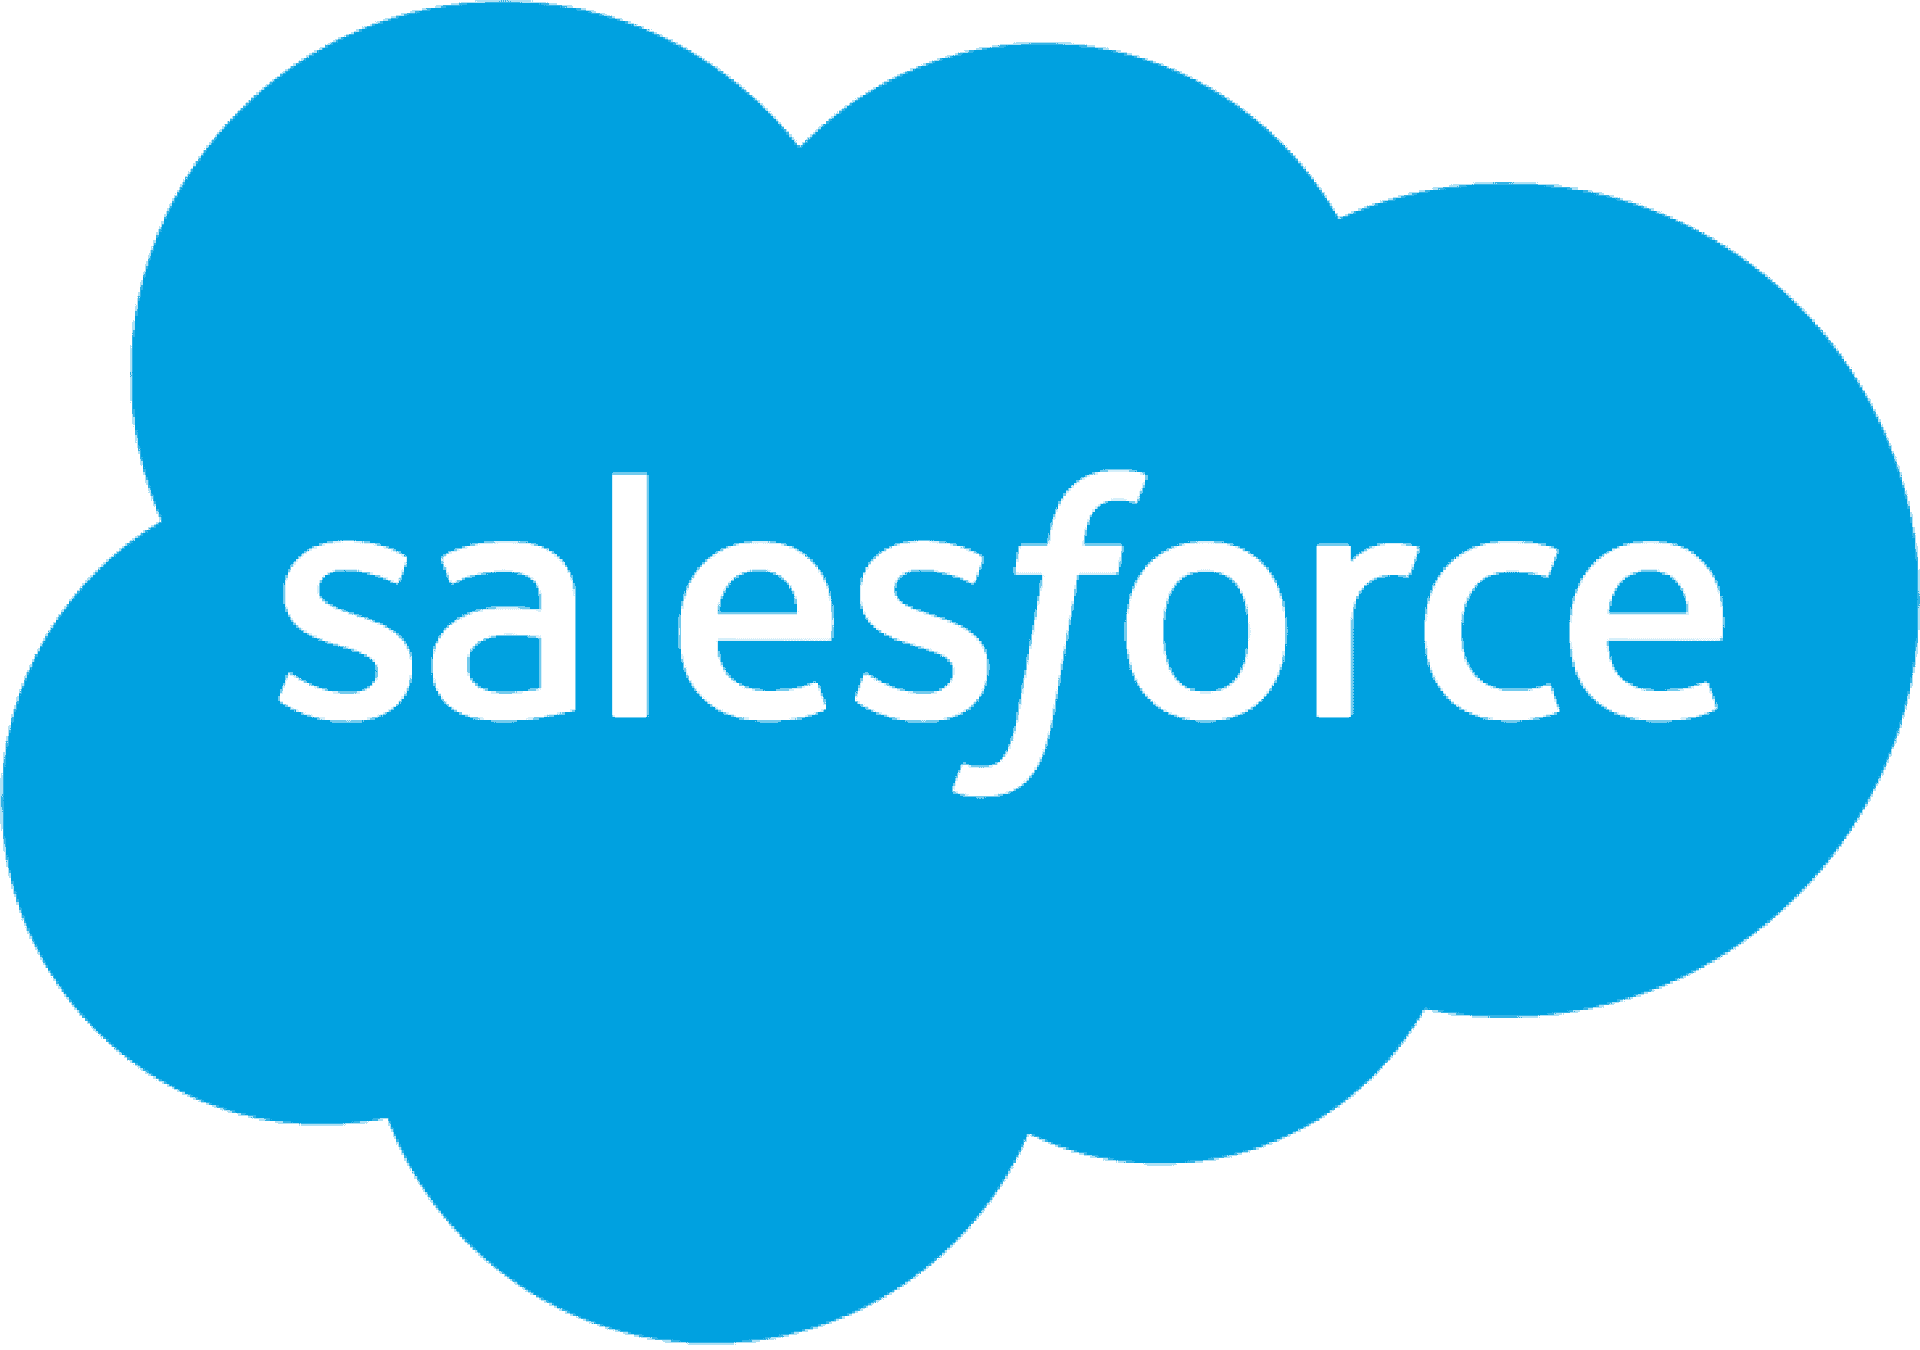 Salesforce vs dynamics, microsoft dynamics crm vs salesforce, microsoft dynamics vs salesforce, salesforce microsoft dynamics, salesforce or microsoft dynamics